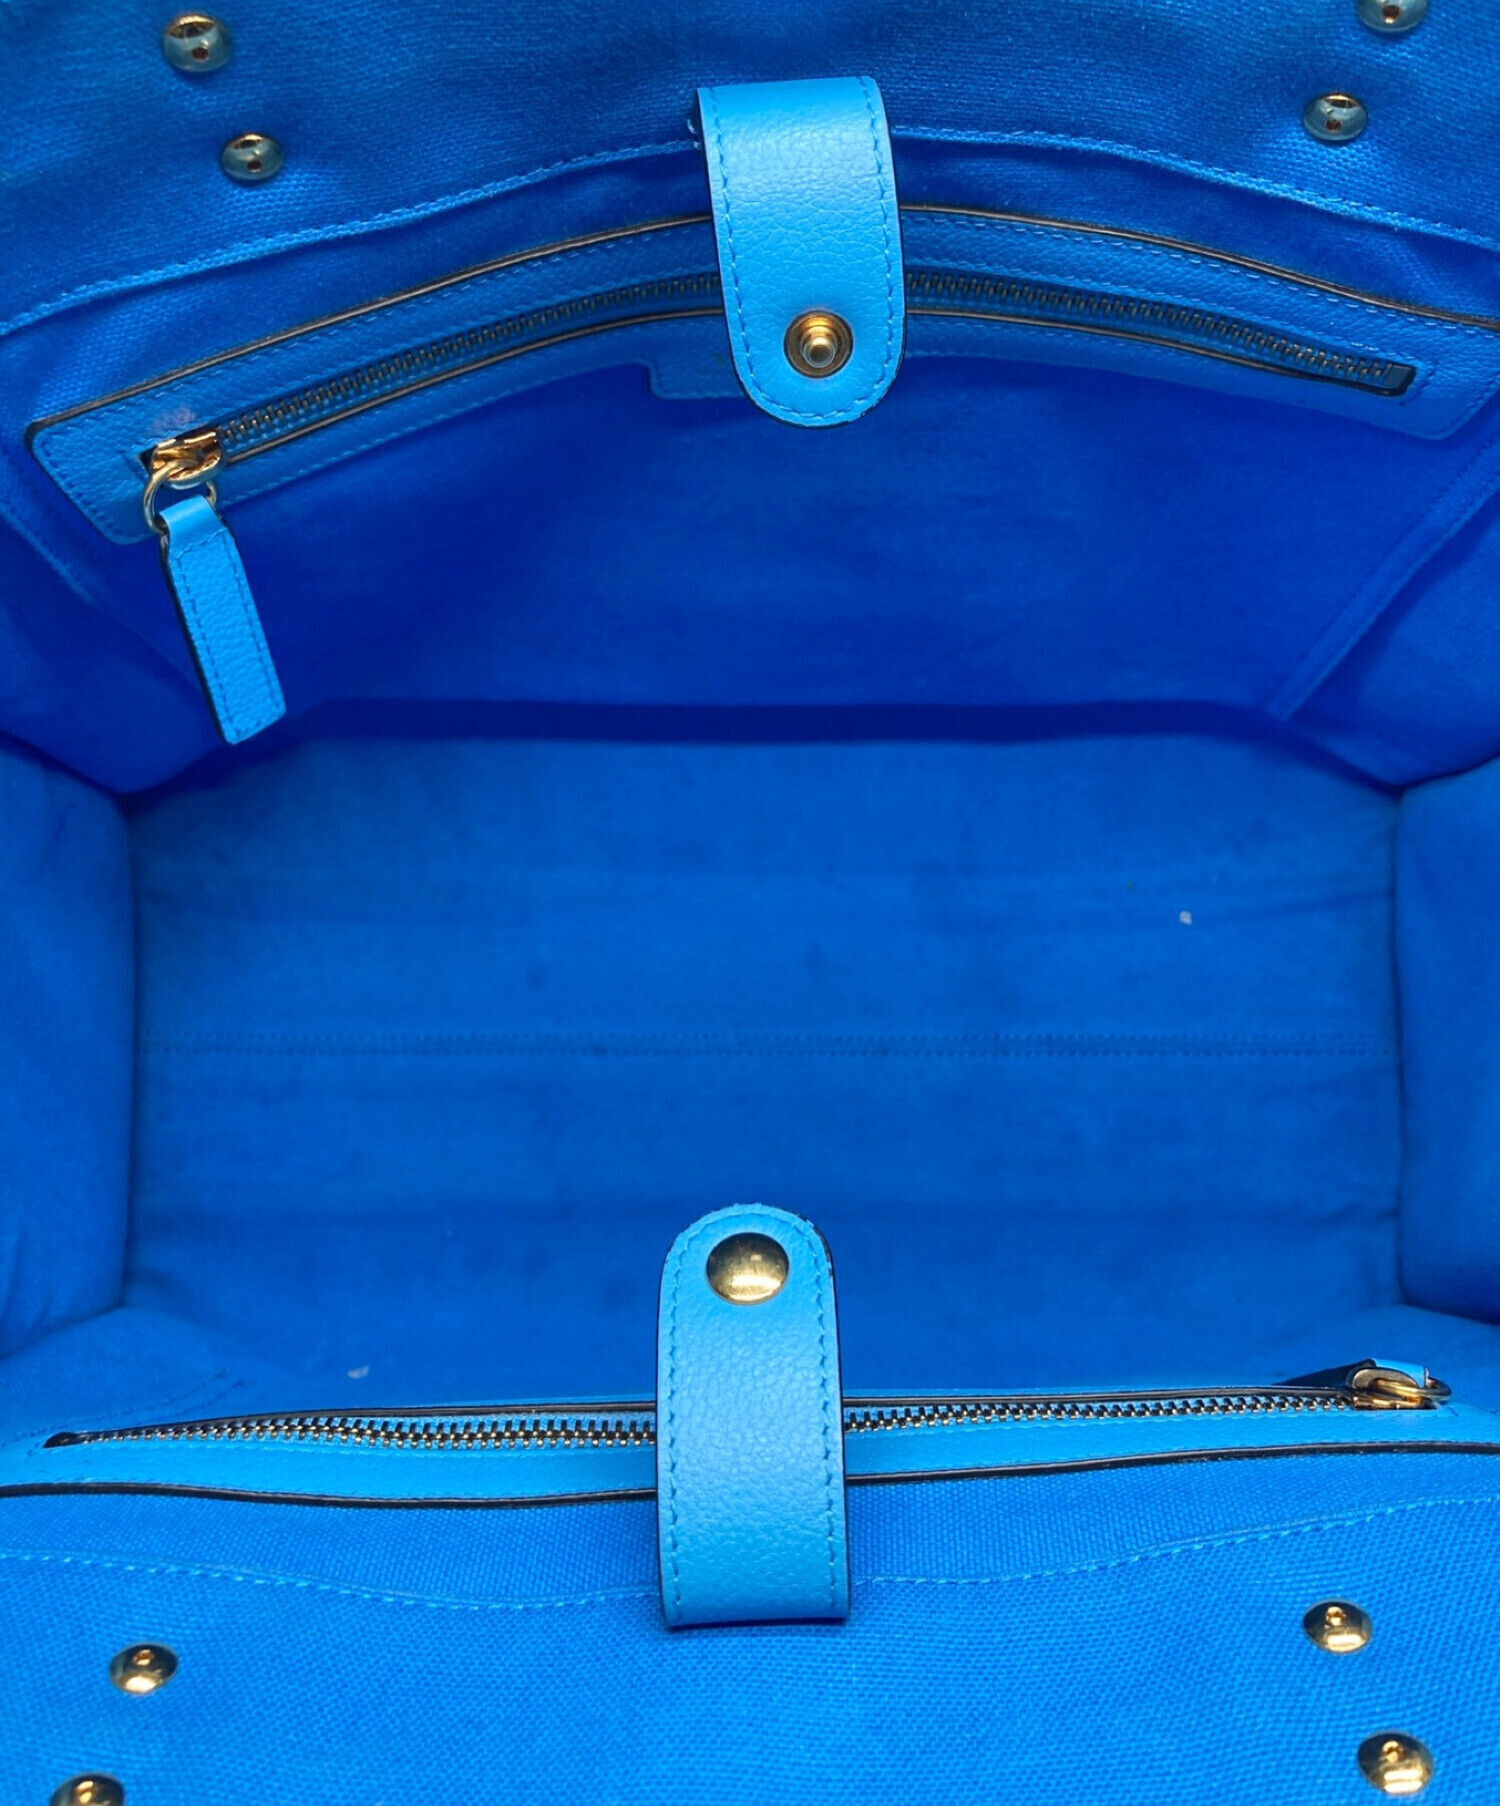 VERSACE (ヴェルサーチ) メデューサロゴキャンバストートバッグ ブルー